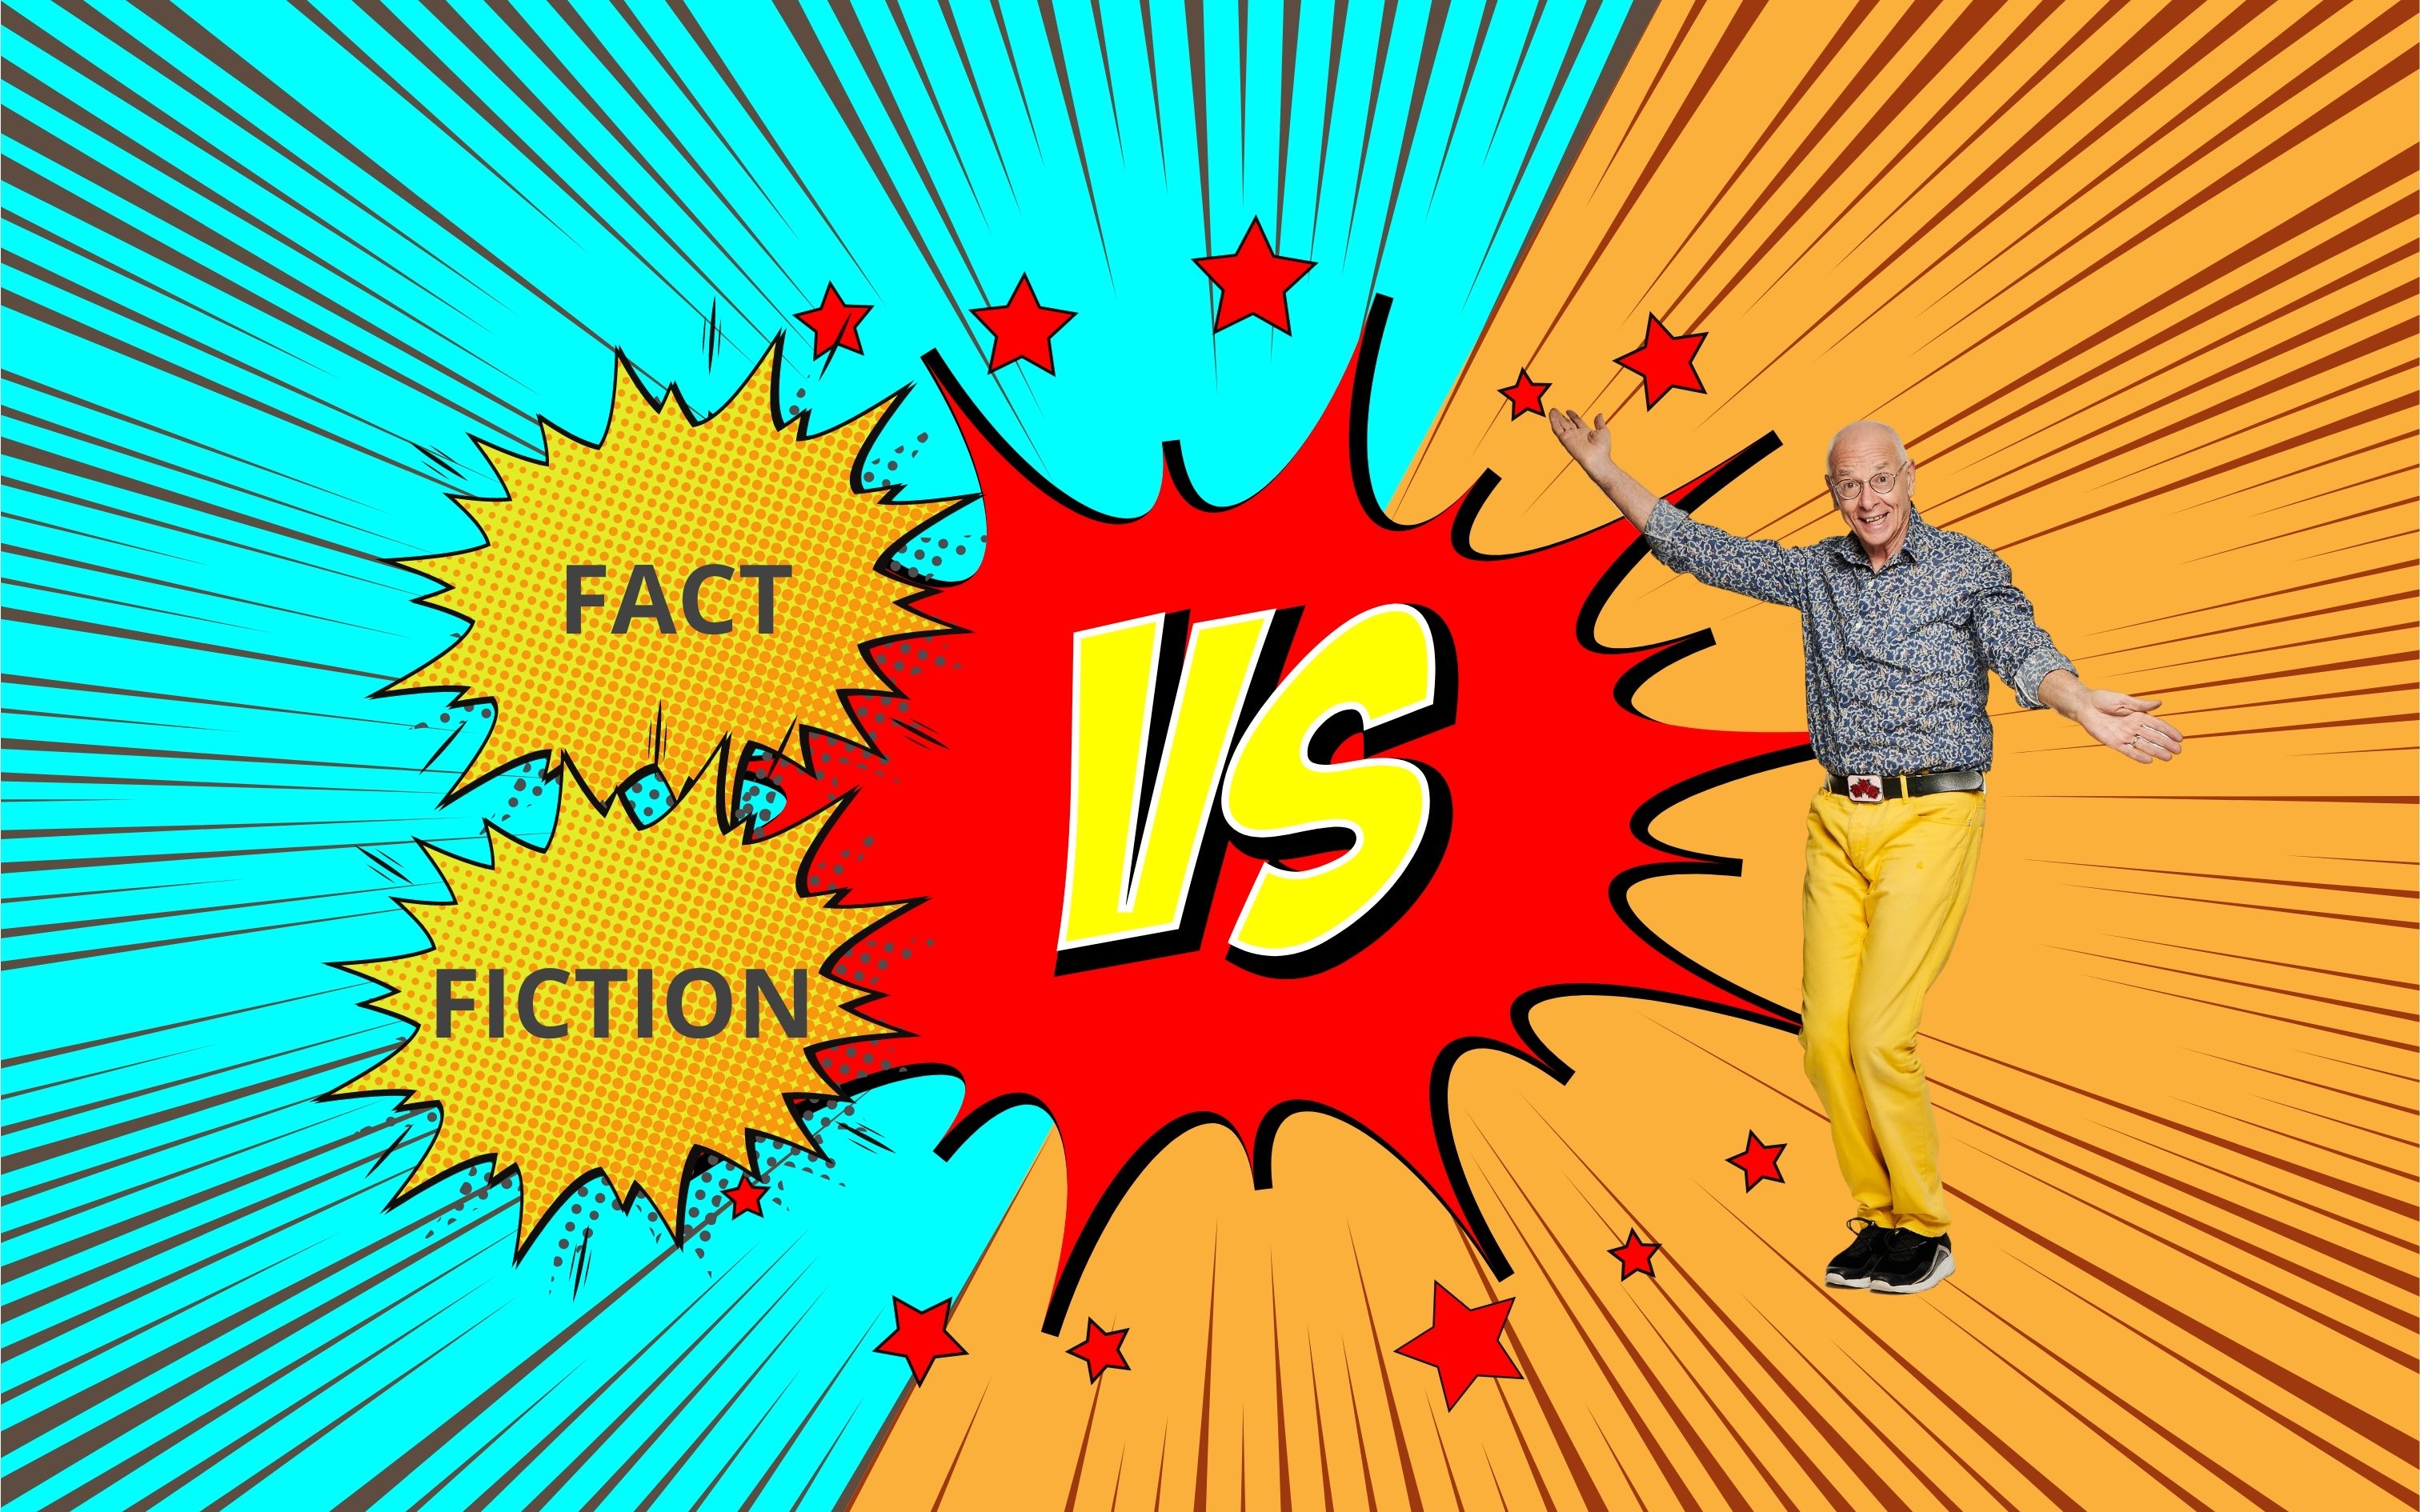 Dr Karl's Fact vs Fiction